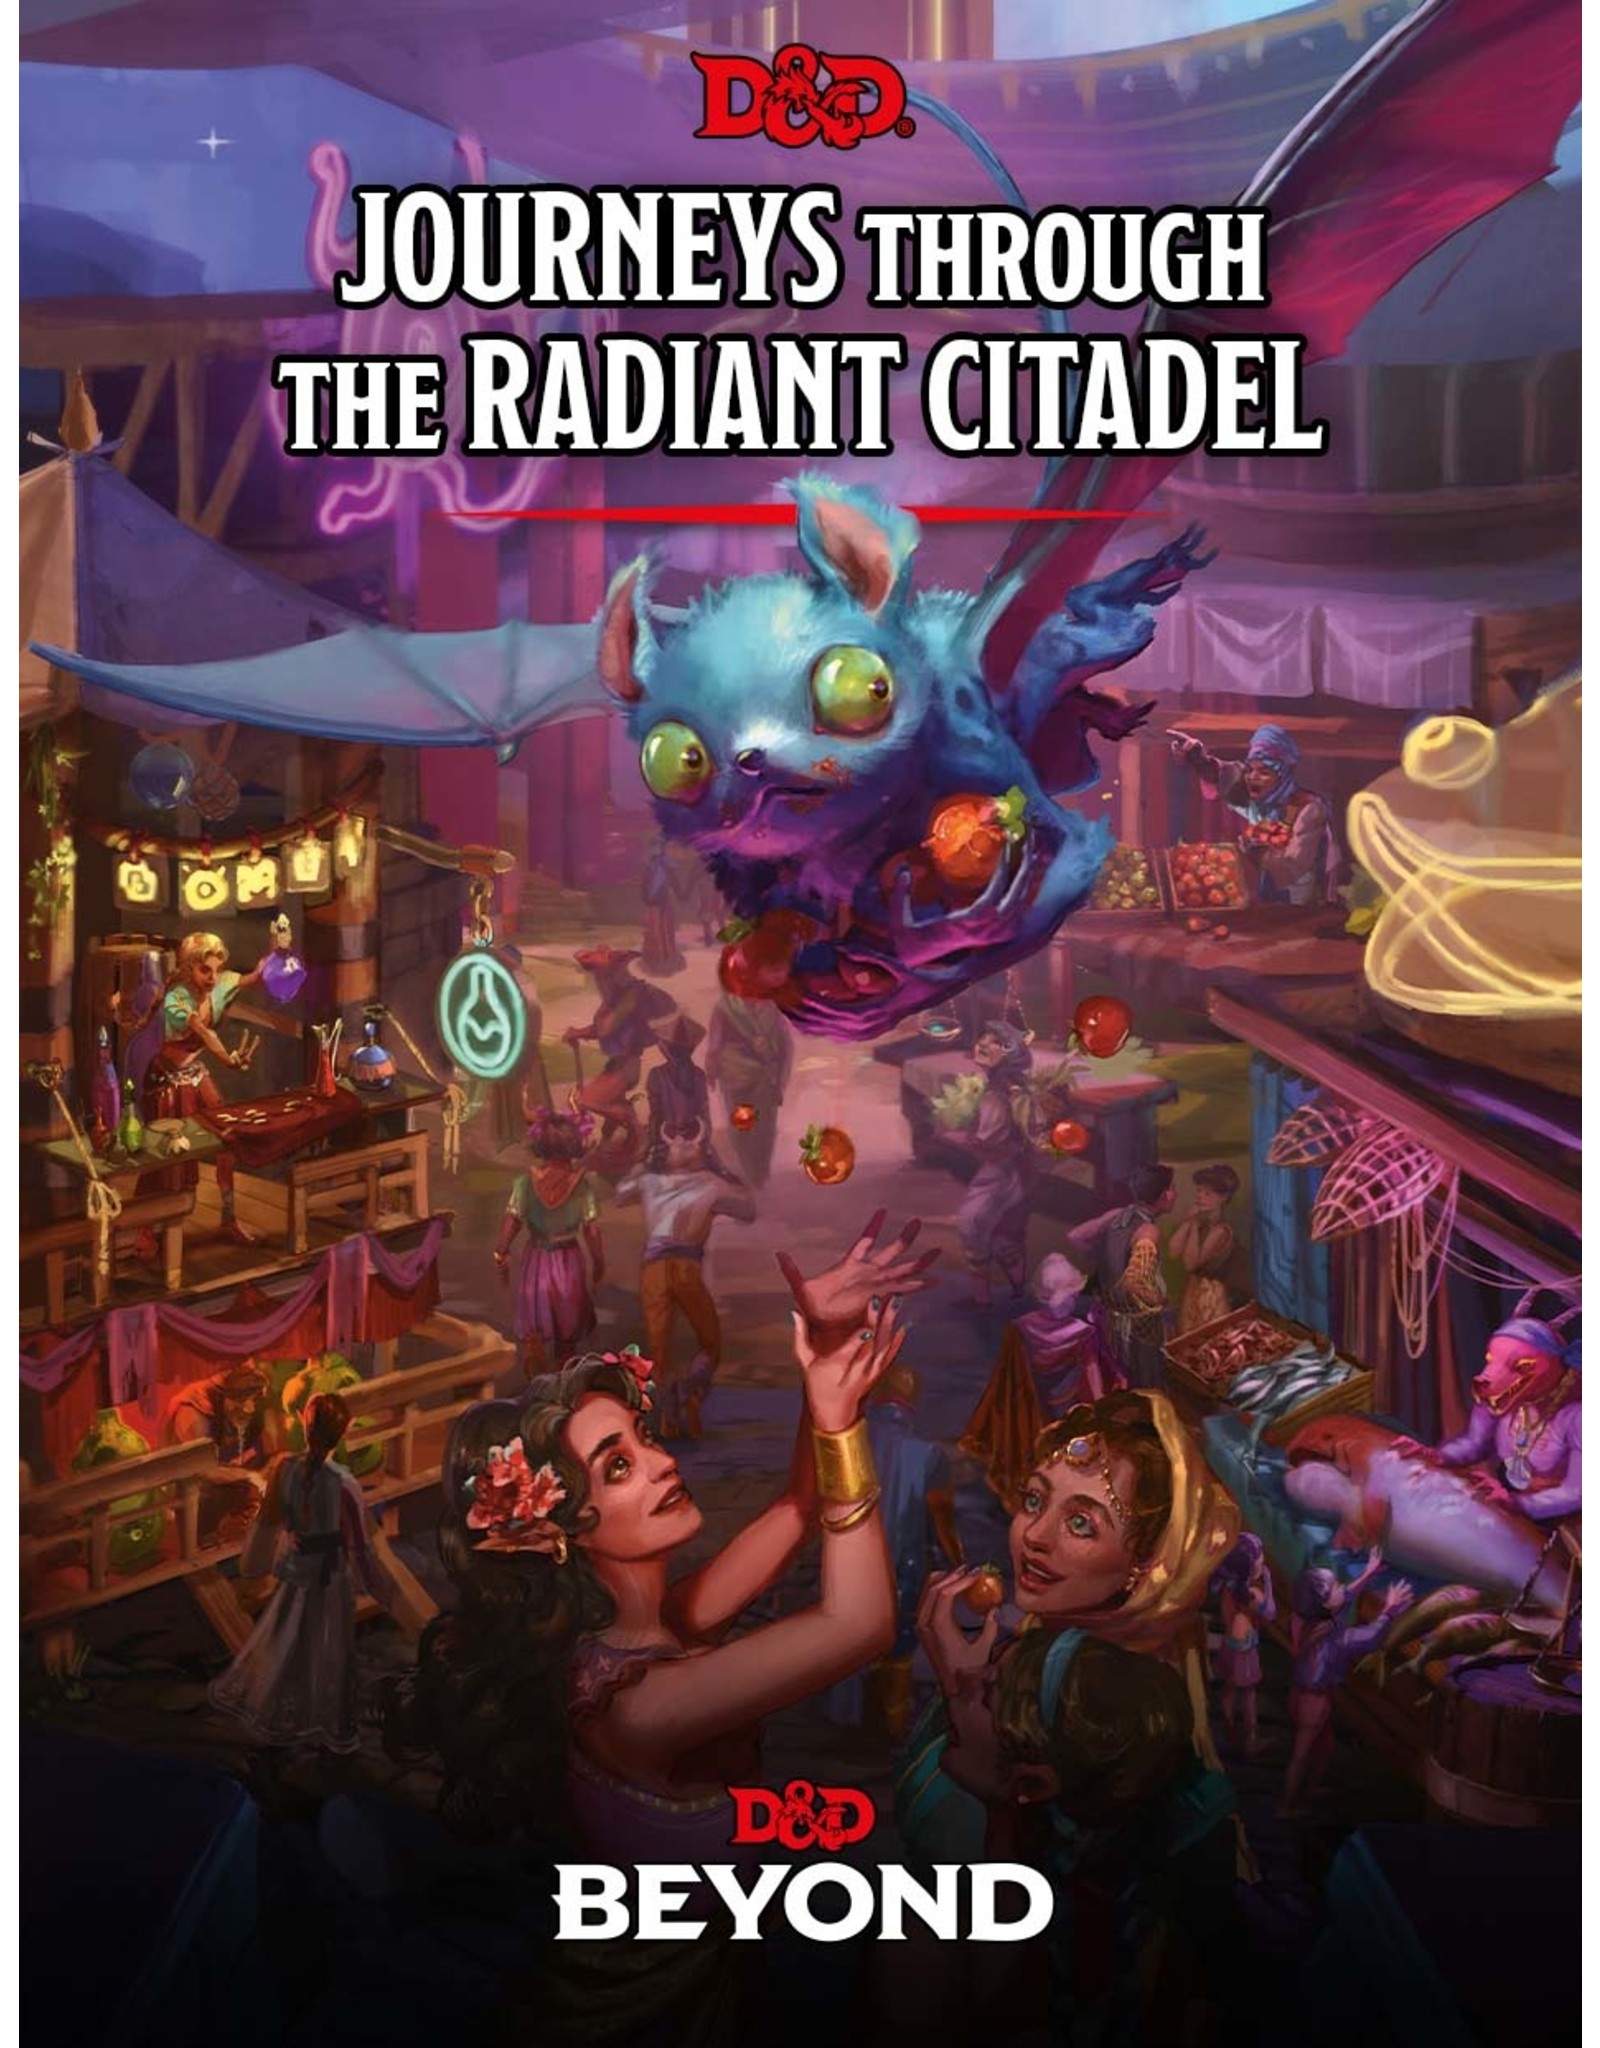 d&d journey through the radiant citadel